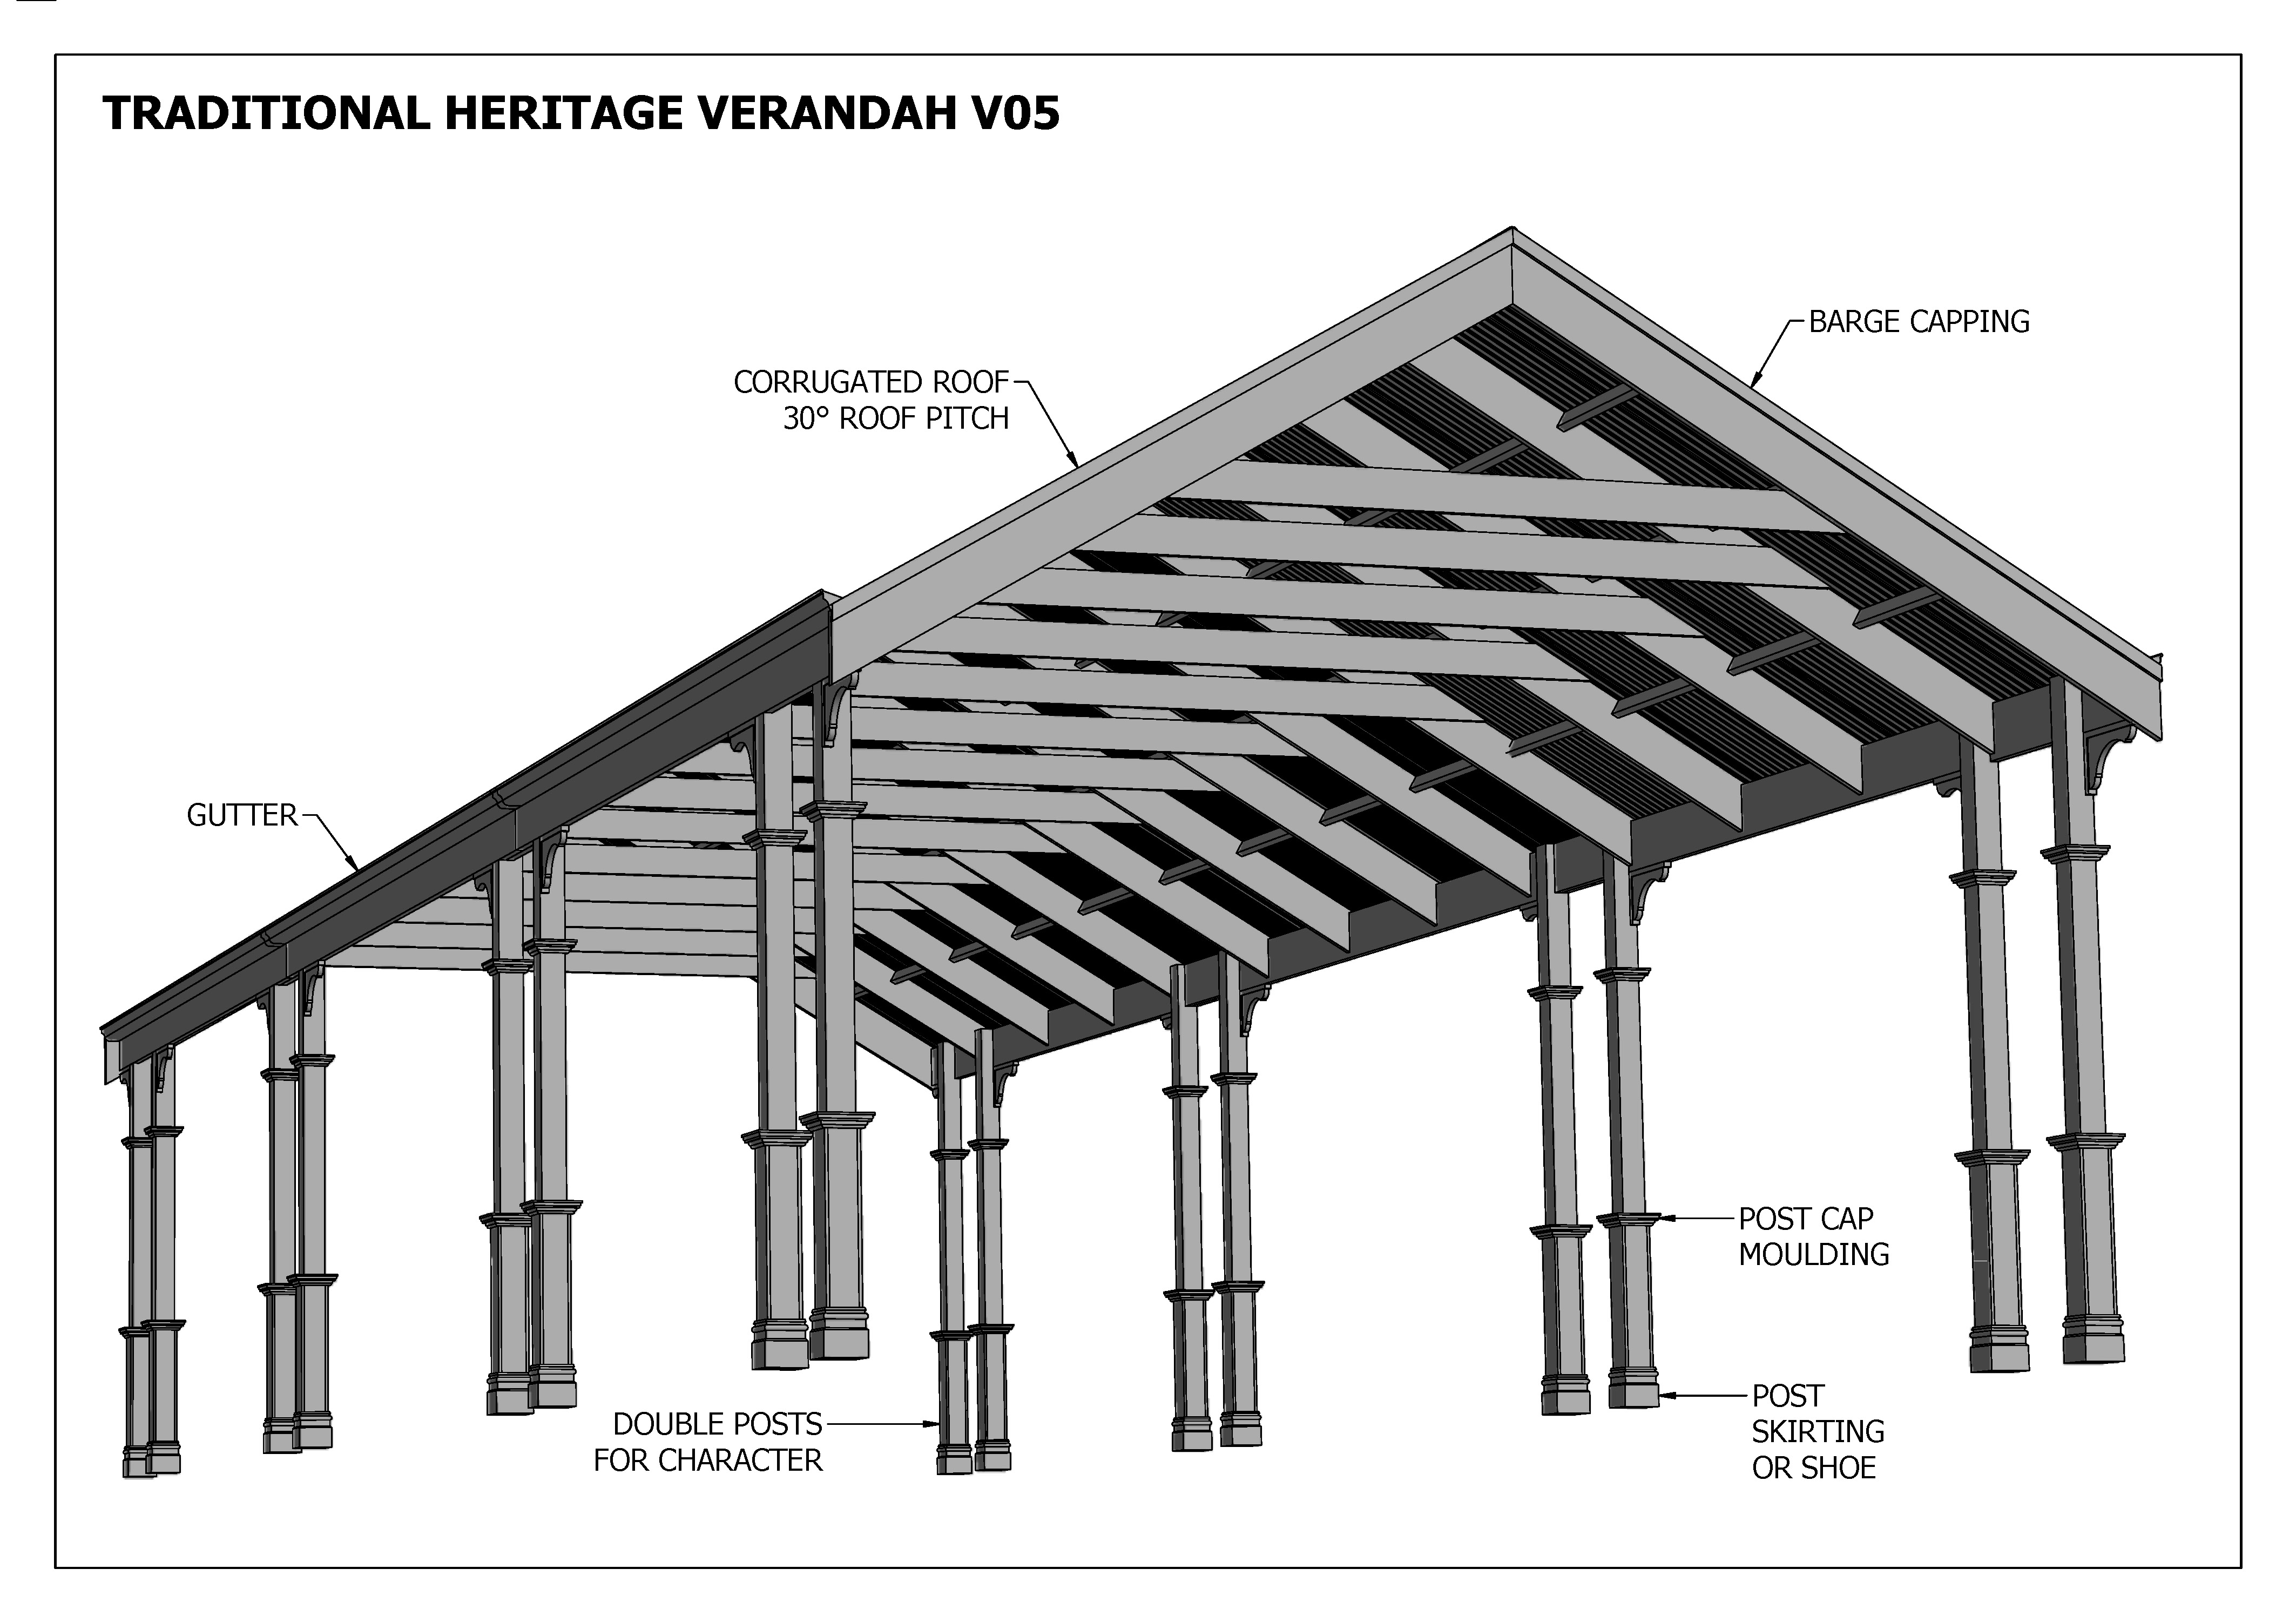 TRADITIONAL HERITAGE CARPORT/VERANDAH V05 (Building Plans ONLY)